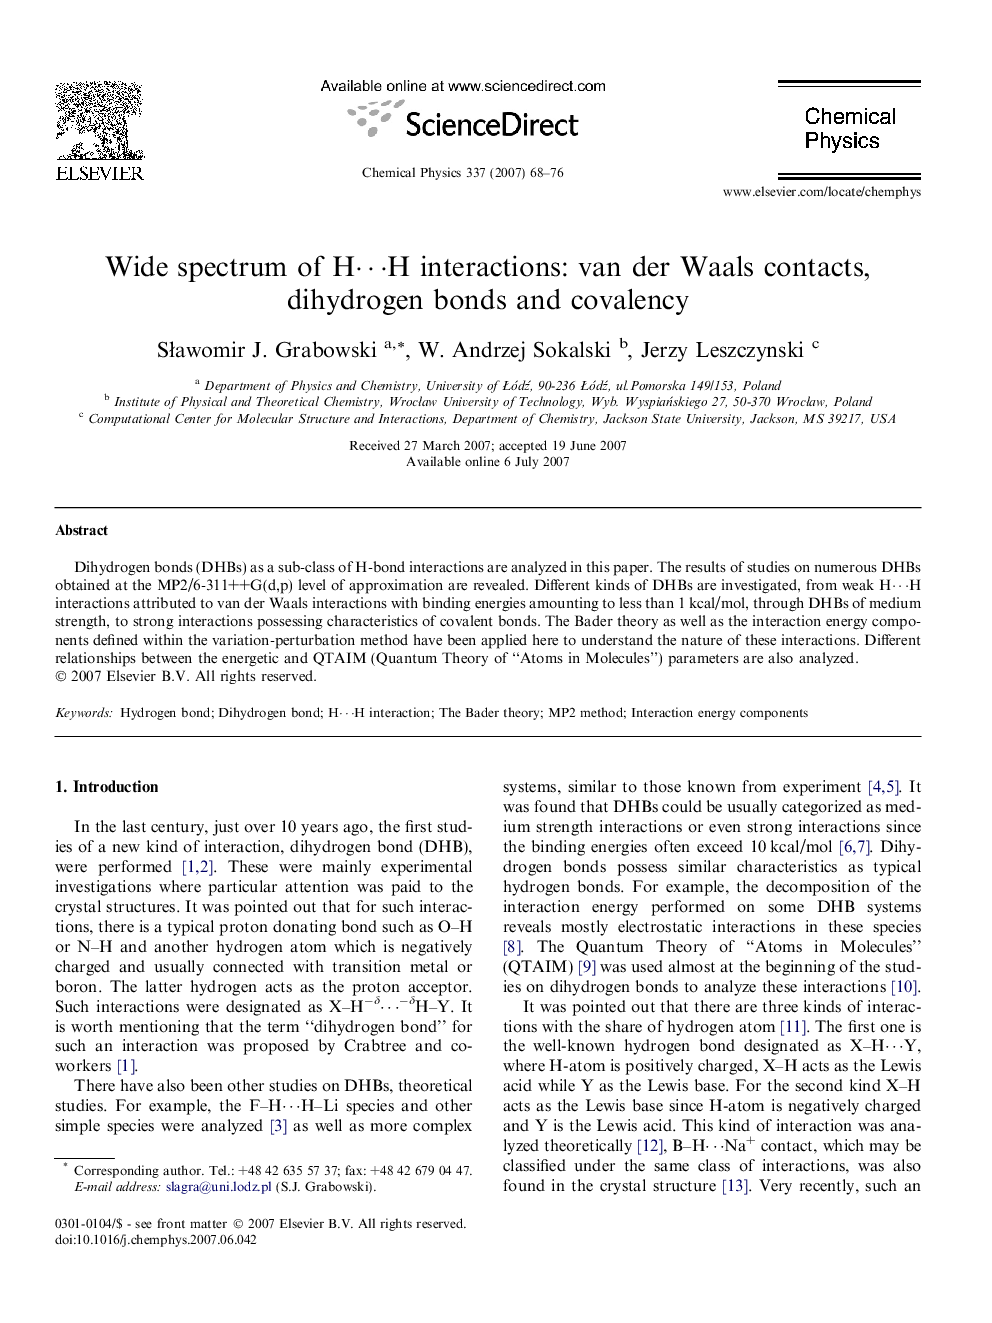 Wide spectrum of Hâ¯H interactions: van der Waals contacts, dihydrogen bonds and covalency